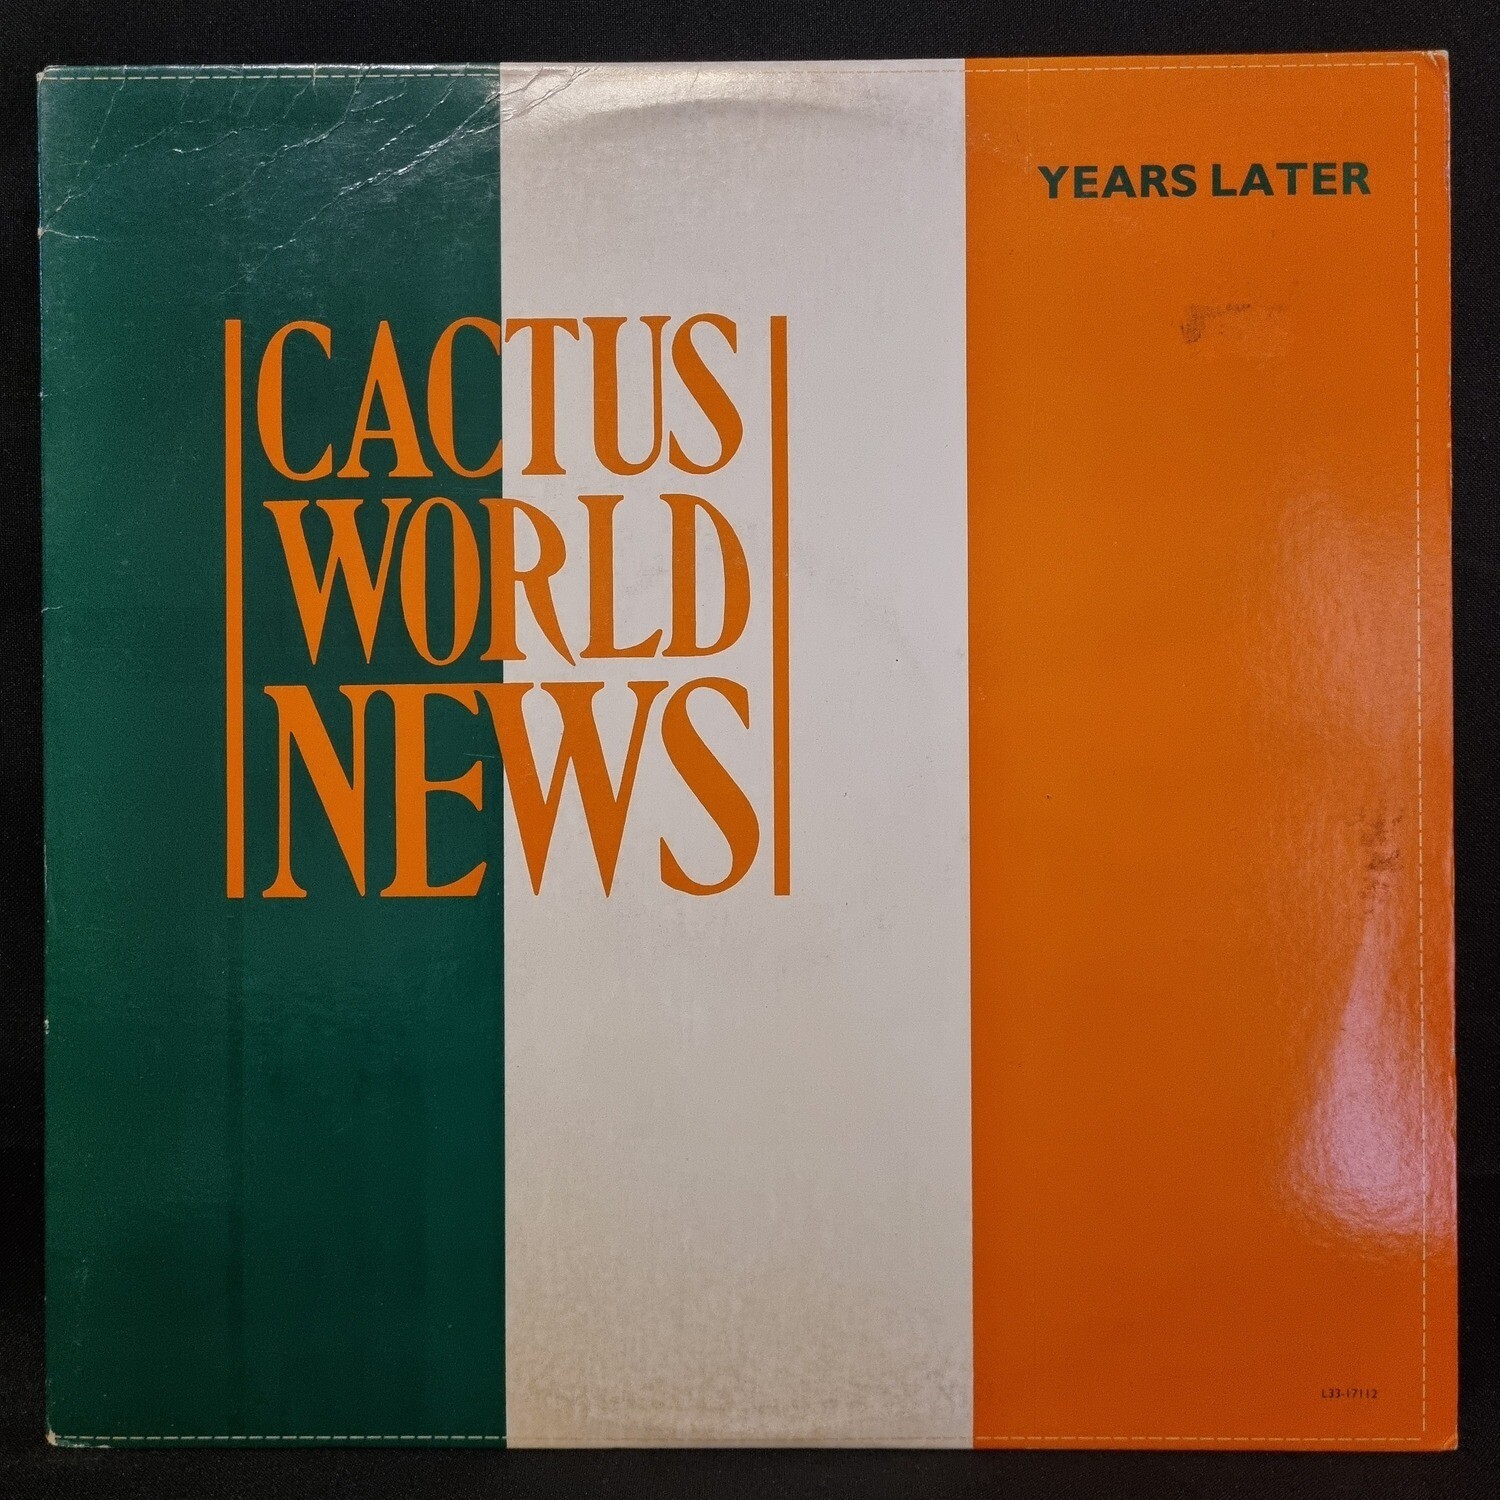 Cactus World News- Years Later 12" single